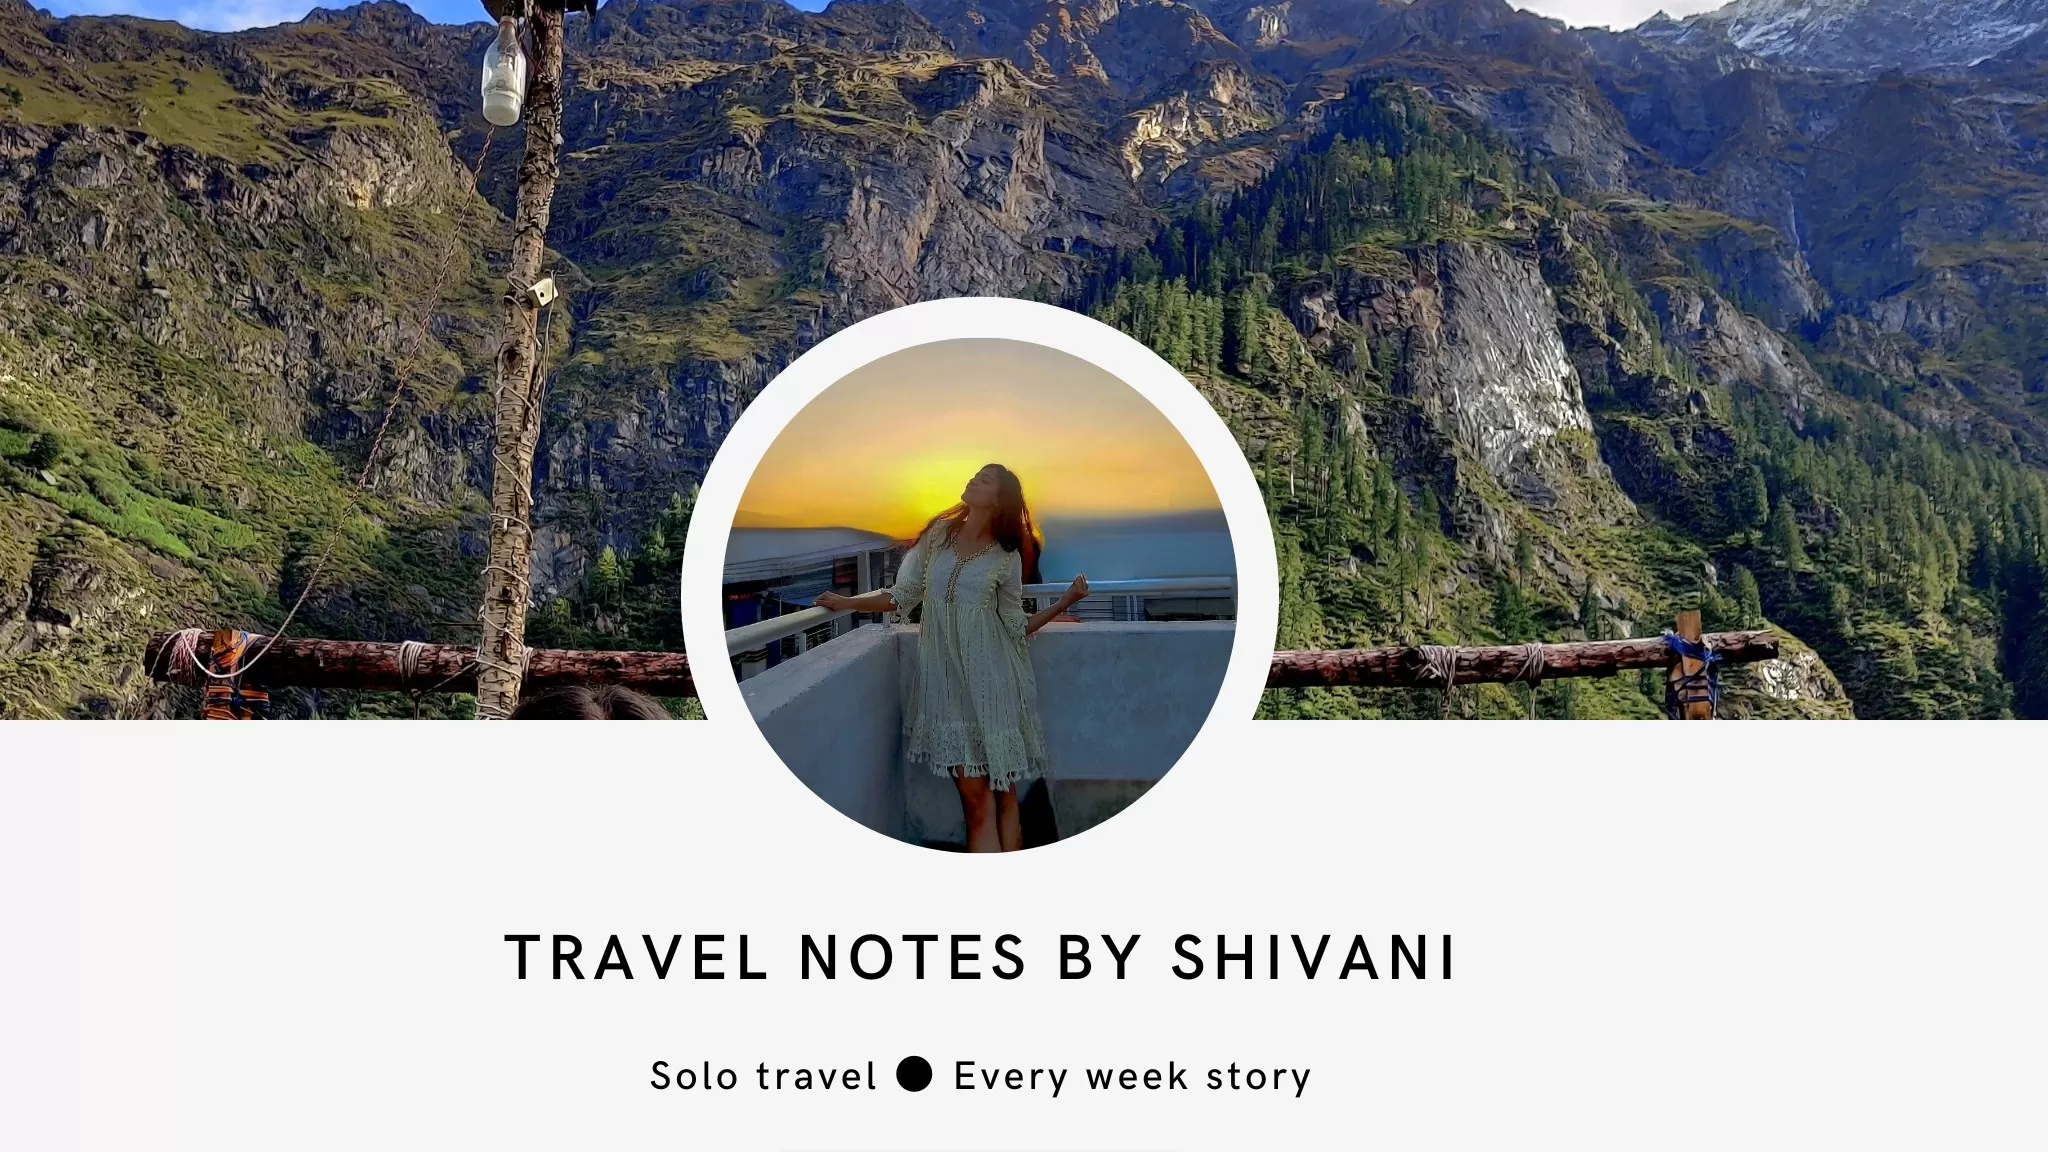 Cover Image of Shivani mishra
Travel notes● Solo traveler 